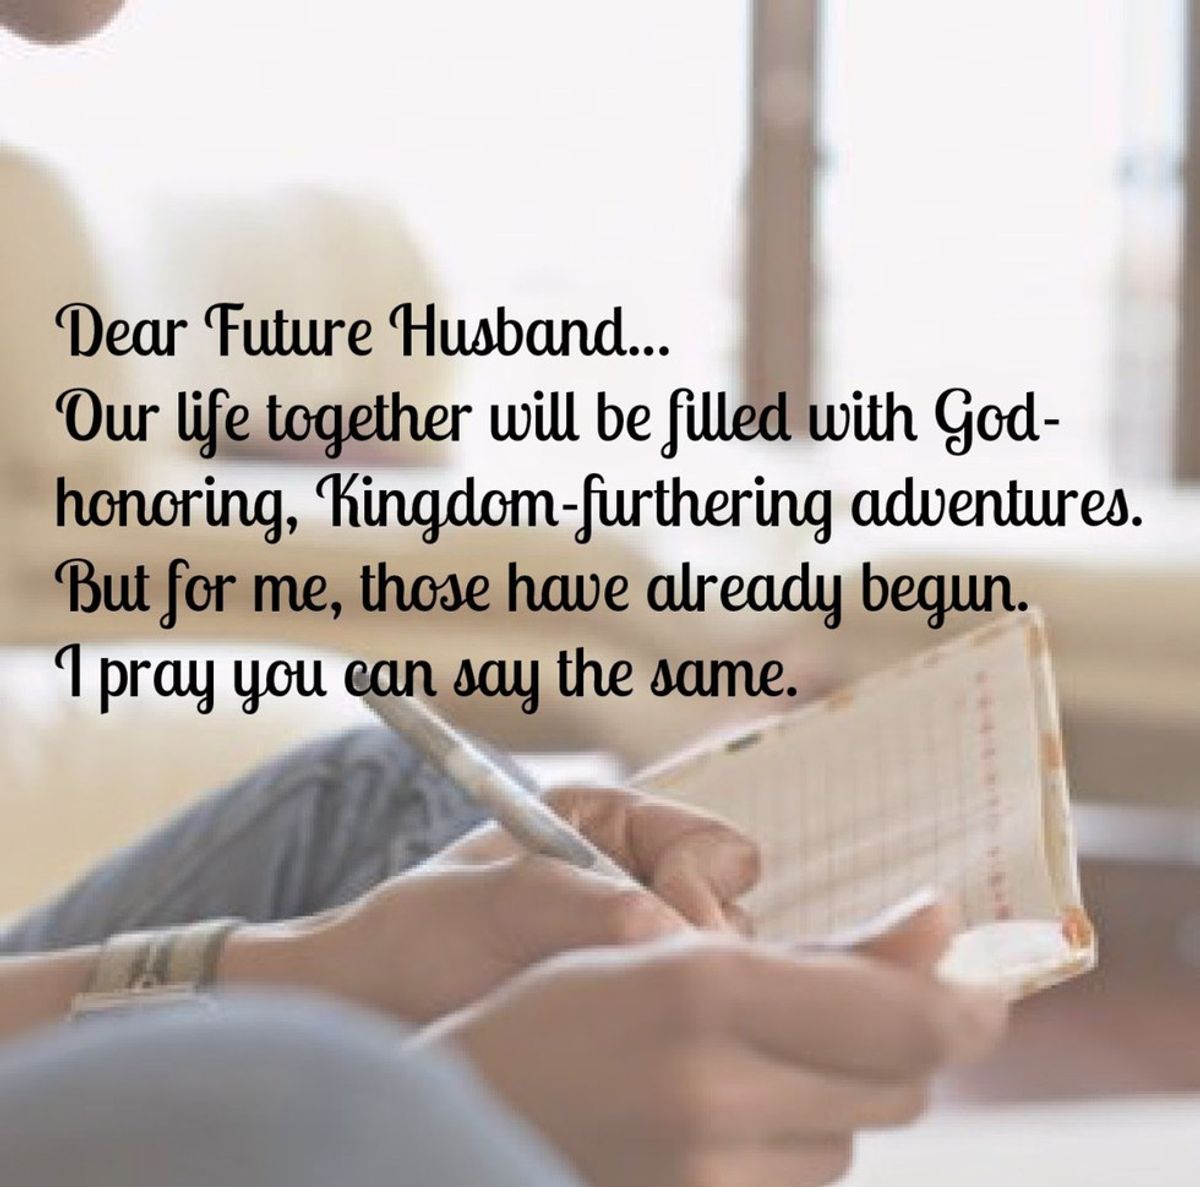 Why I Write to my Future Husband